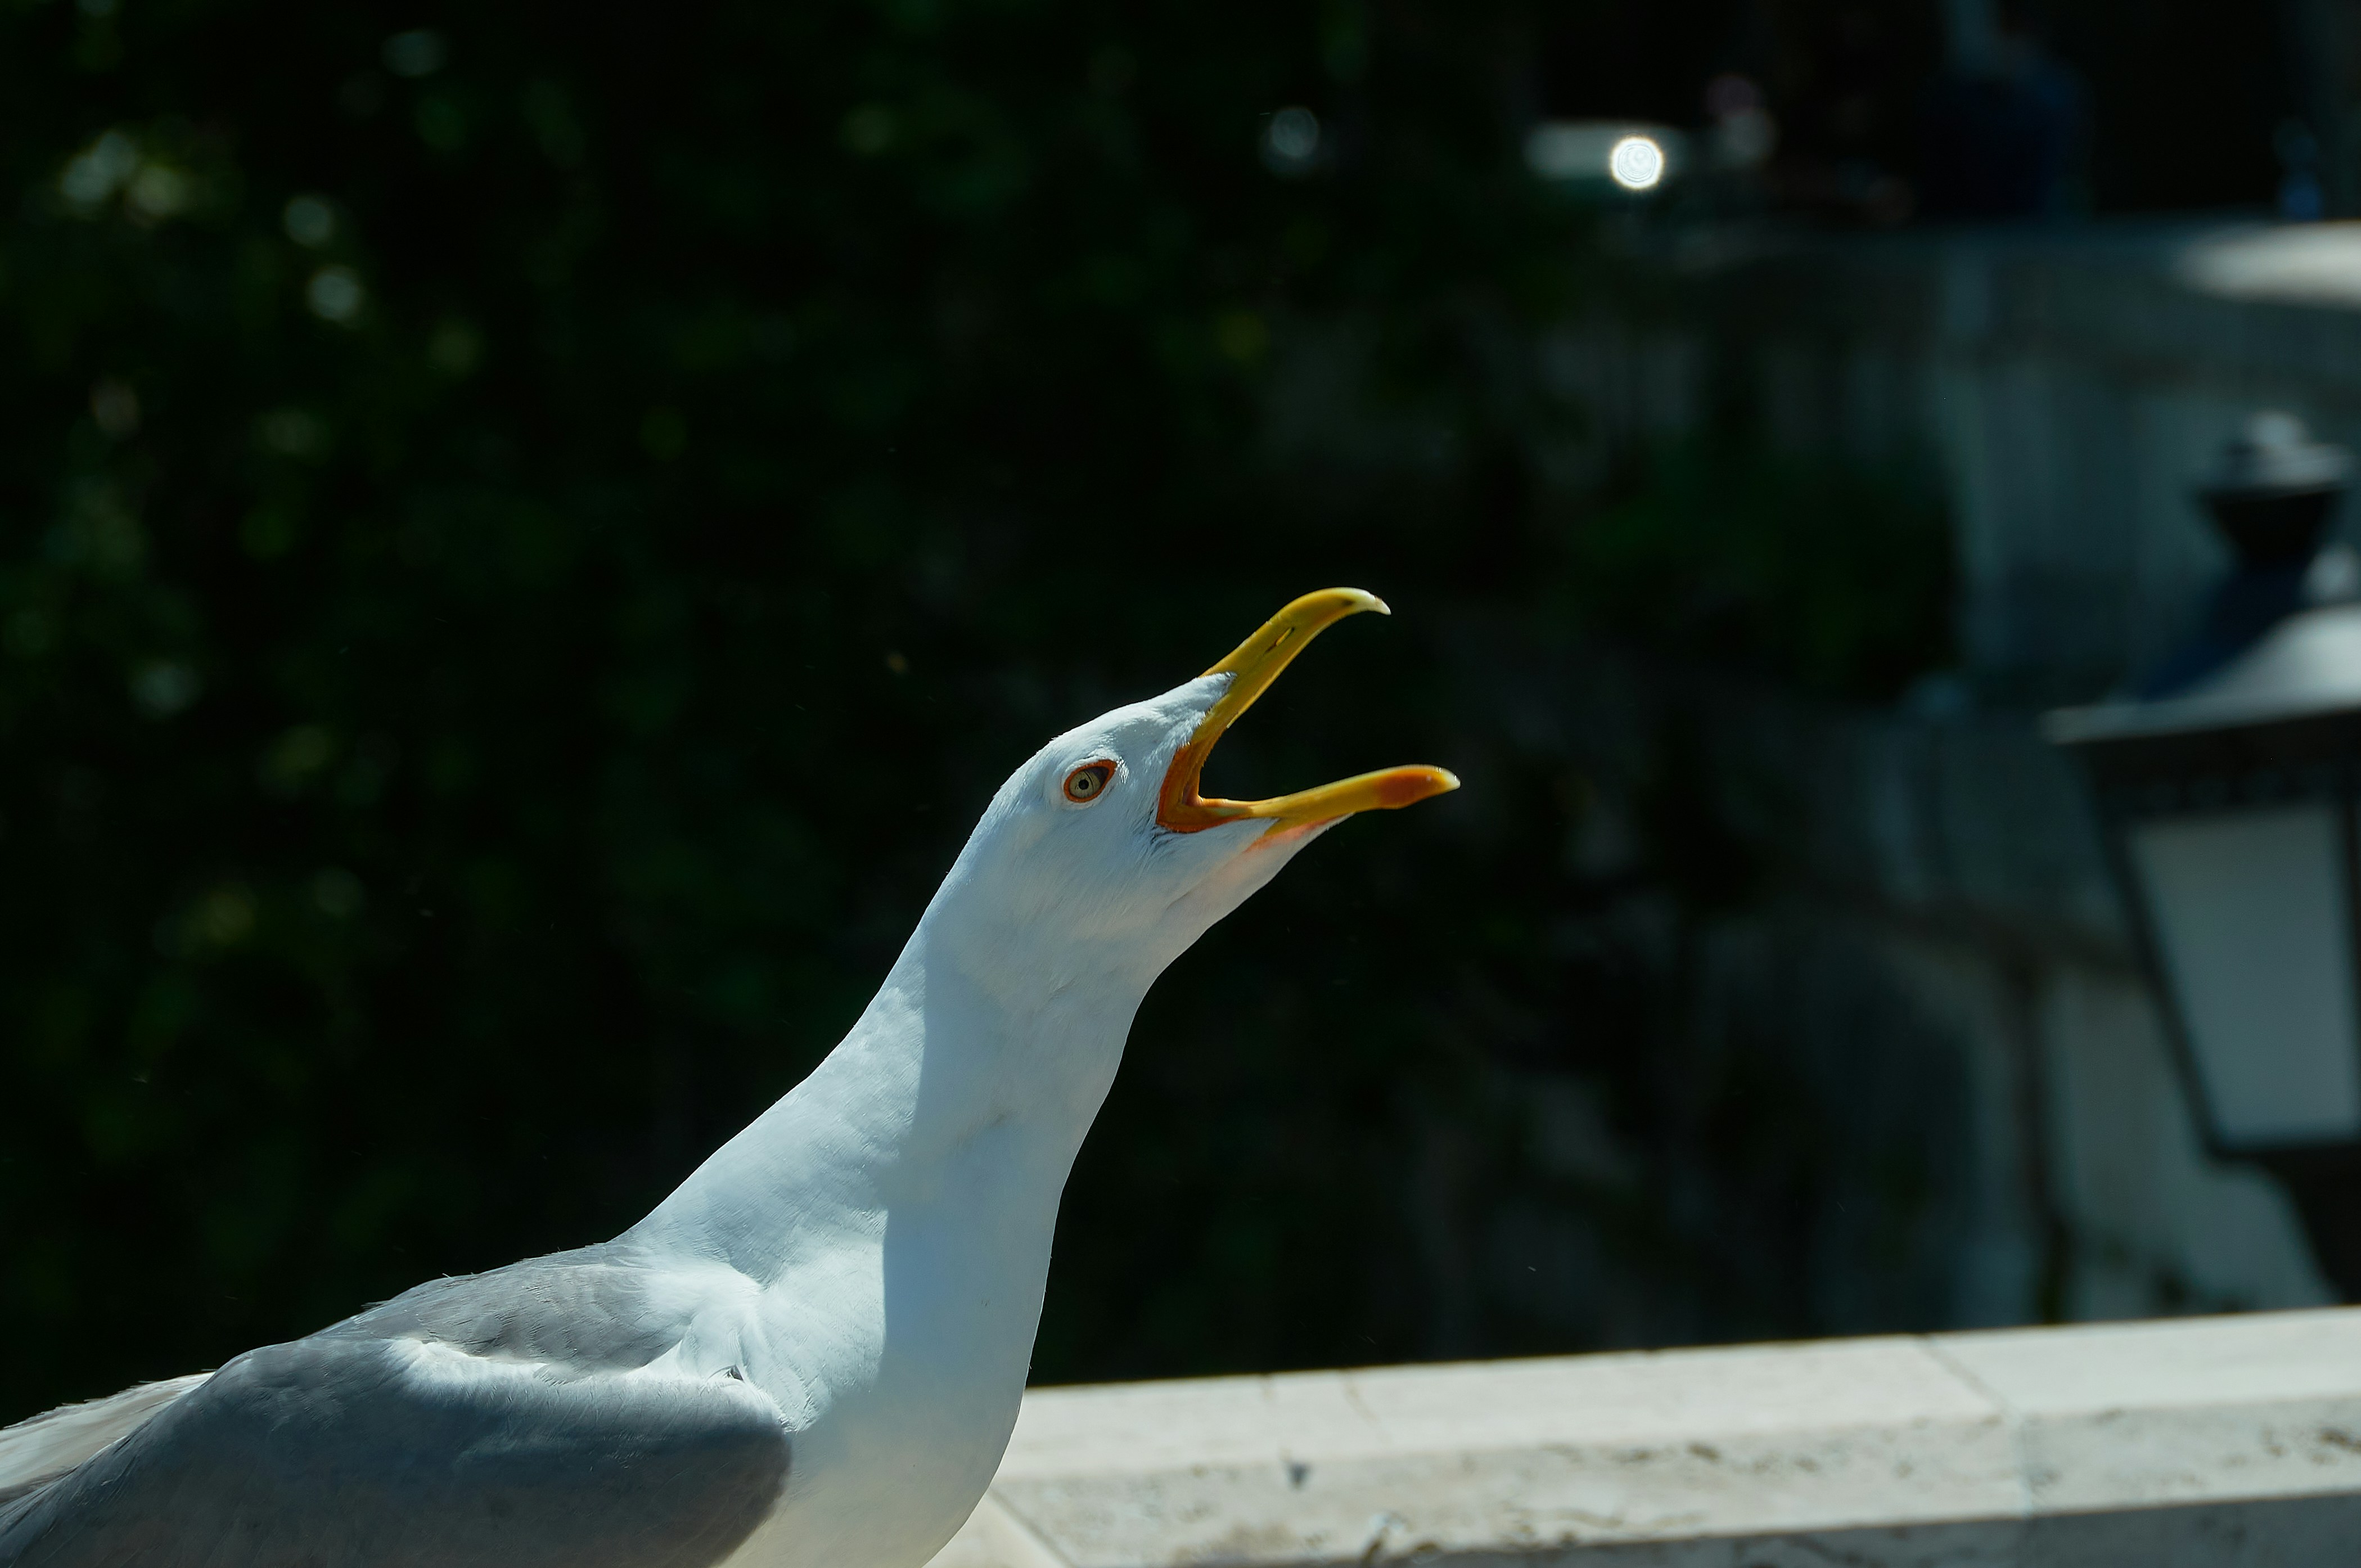 Scream of the seagull